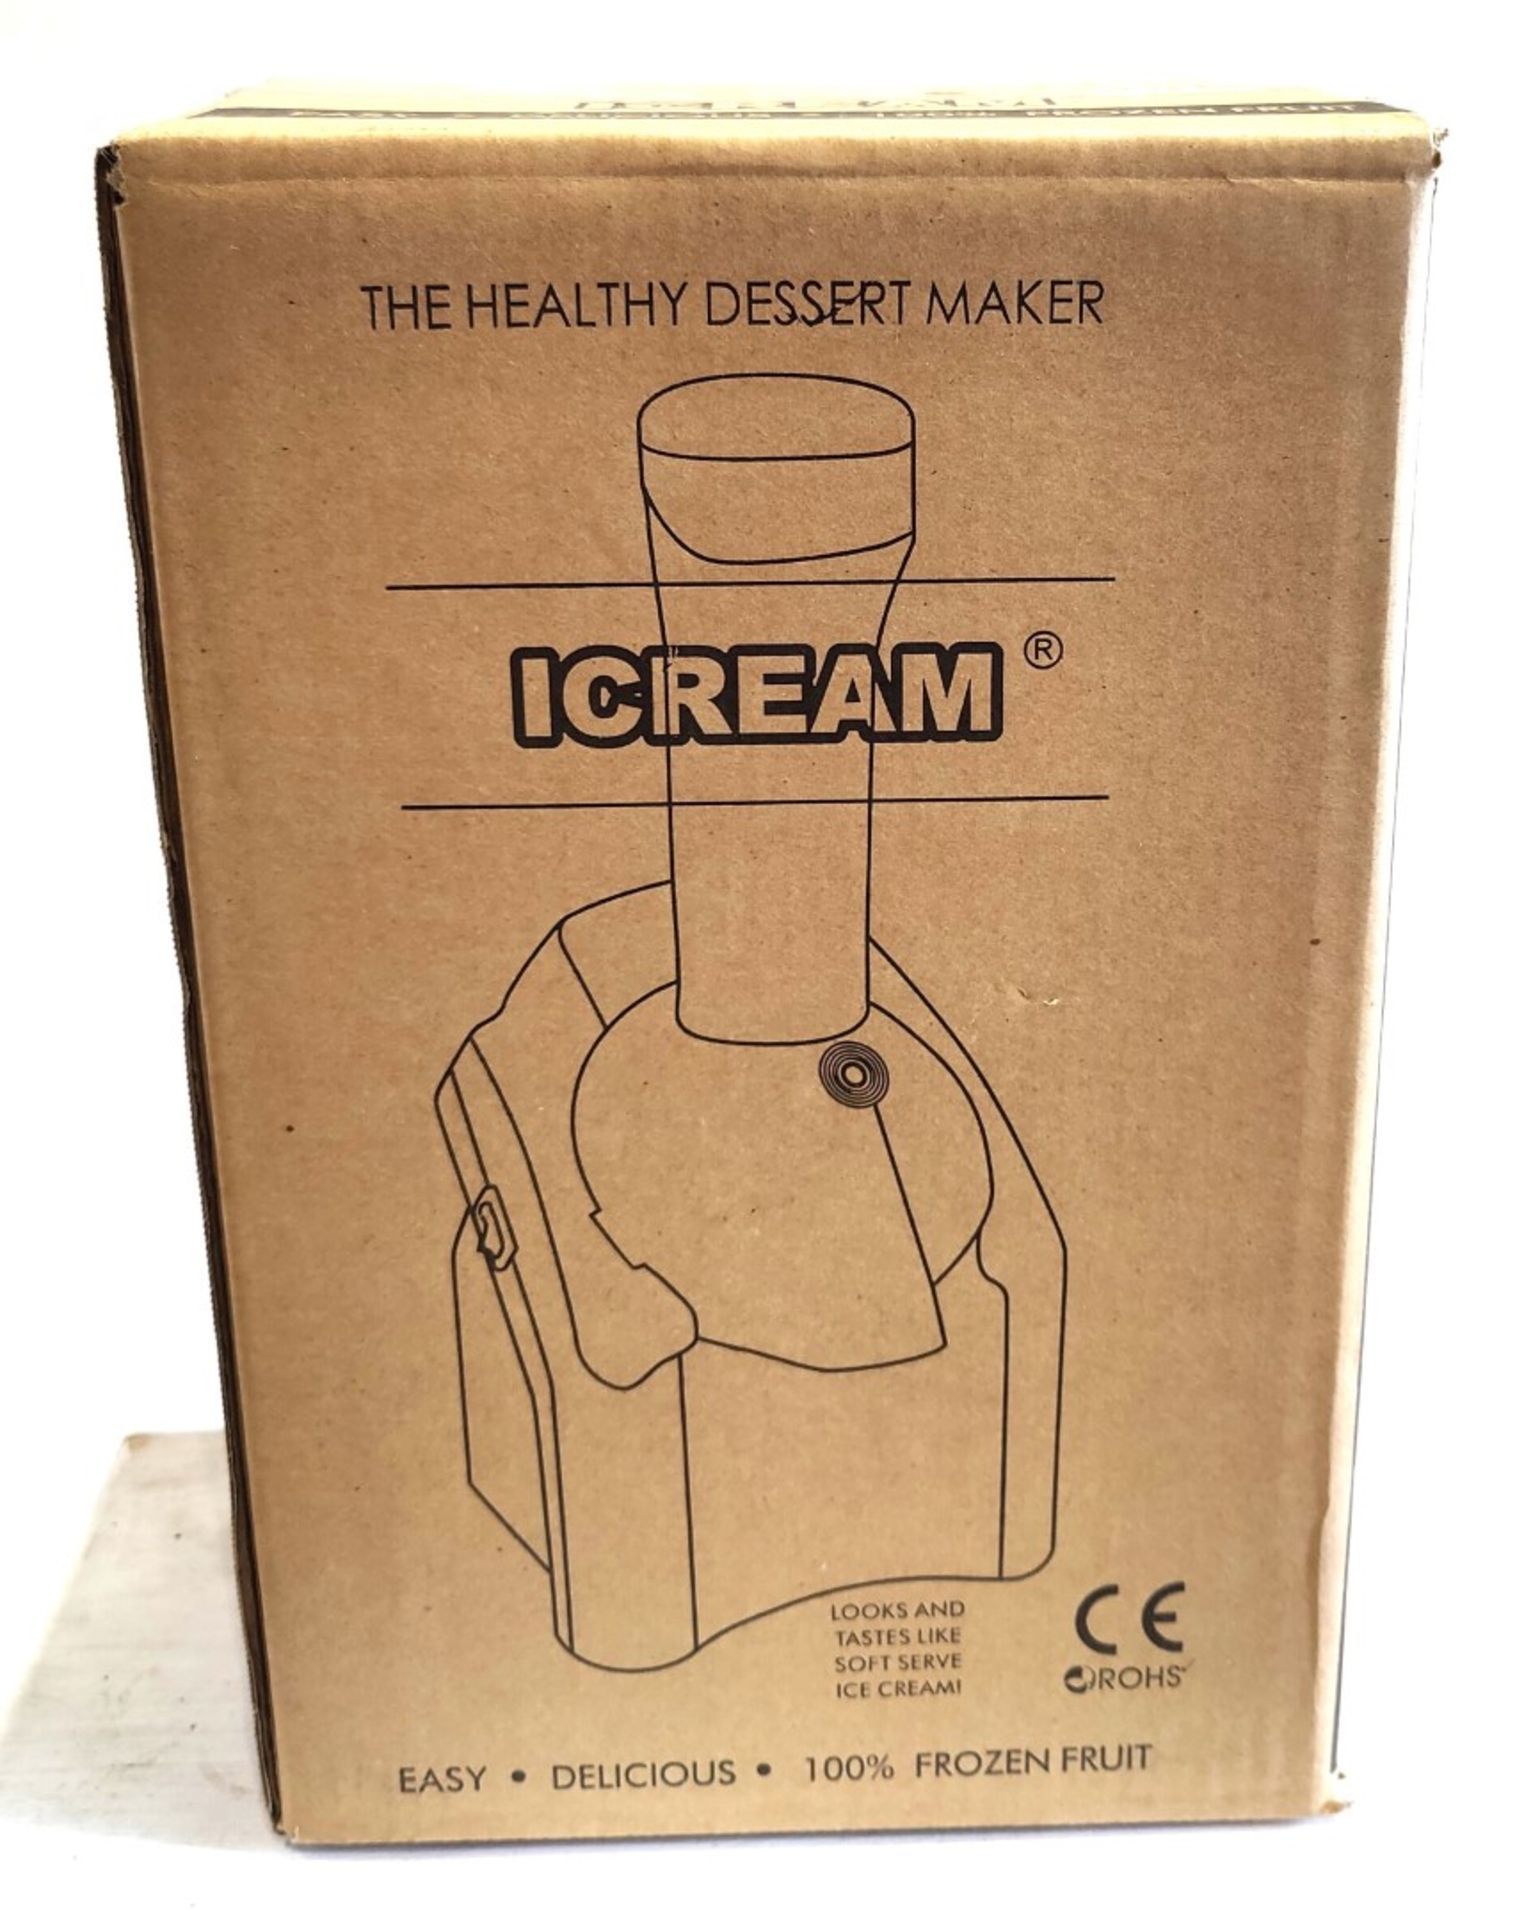 1 x Icream Healthy Desert Maker - Yogurt and Soft Ice Cream Home Appliance - 240v - Brand New - Image 2 of 12